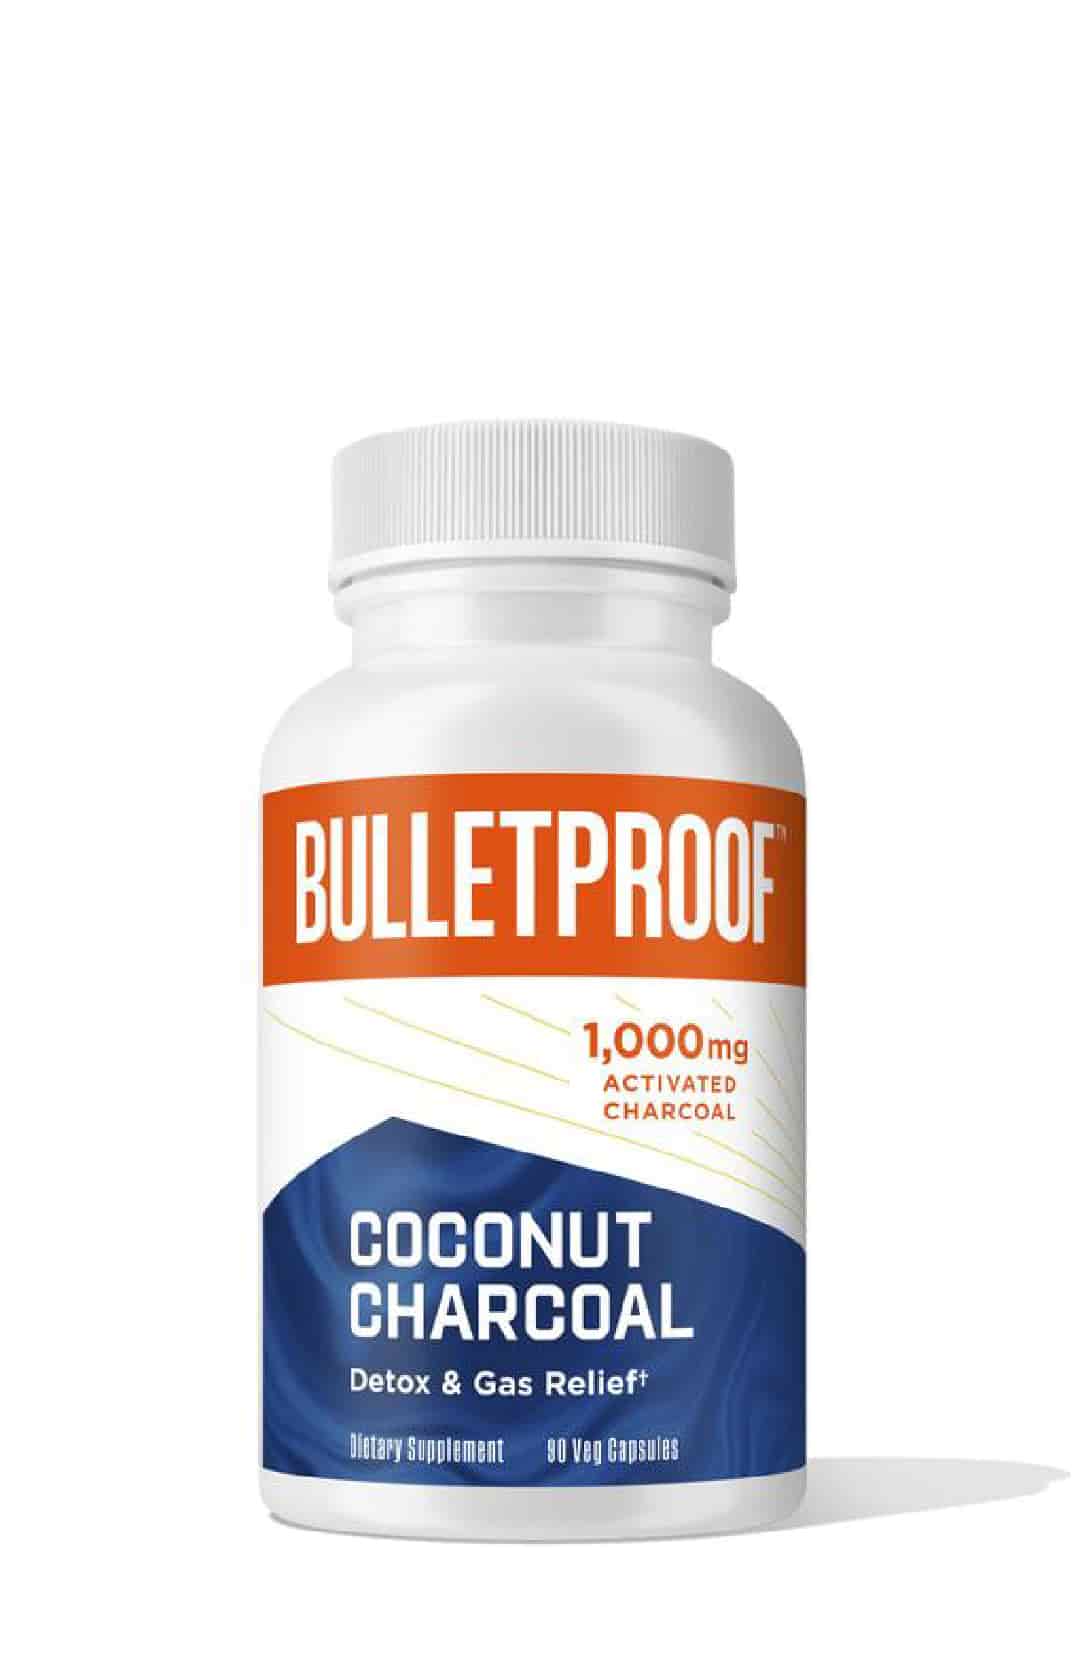 Bulletproof Coconut Charcoal Capsules bei LiveHelfi kaufen